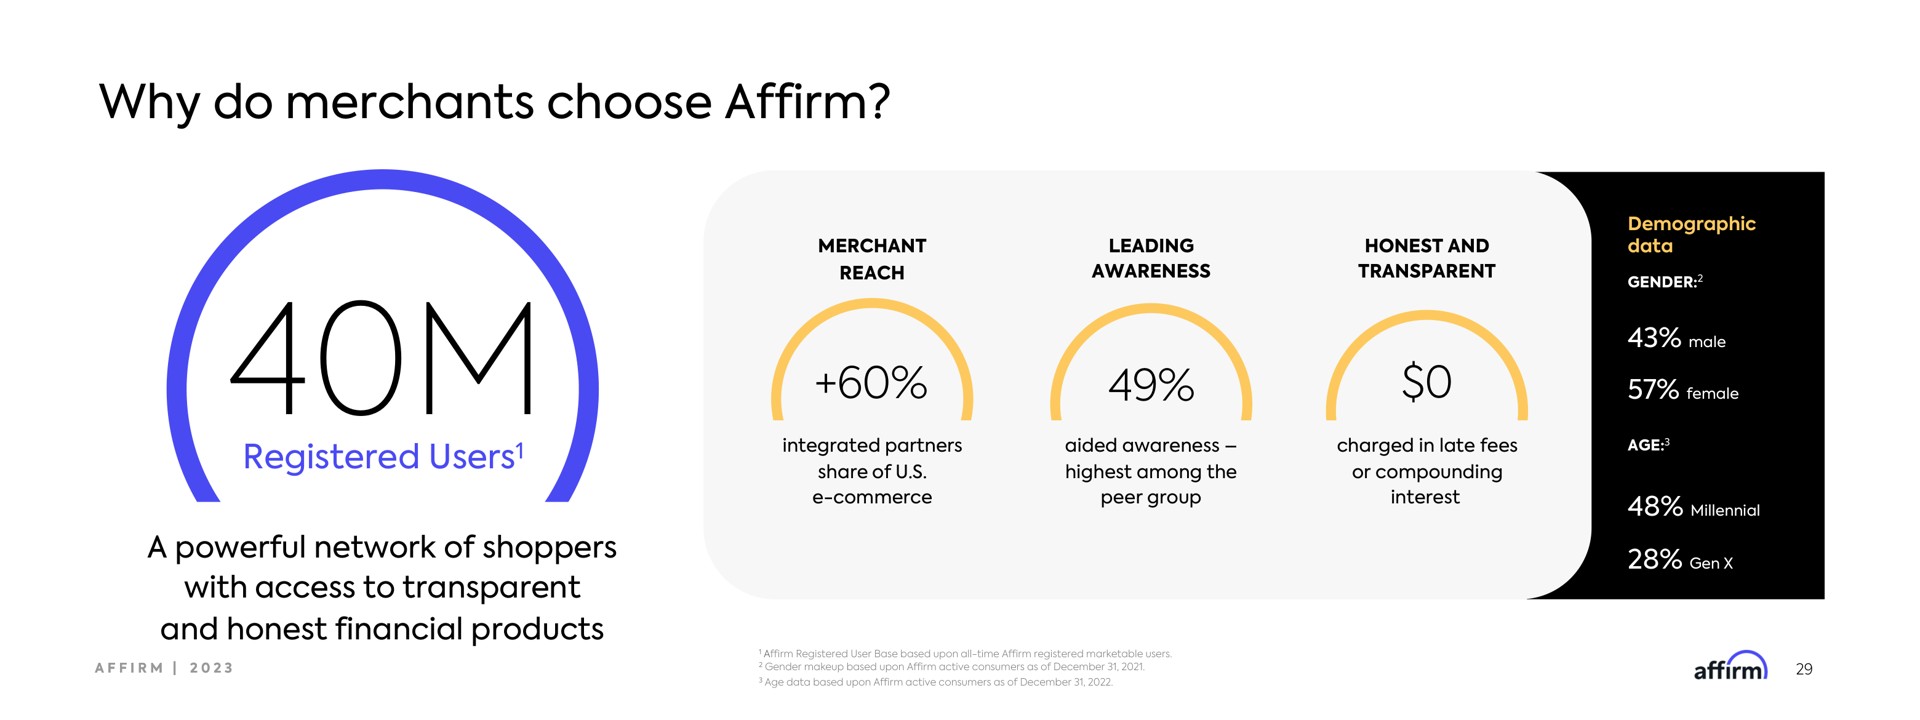 why do merchants choose affirm so | Affirm